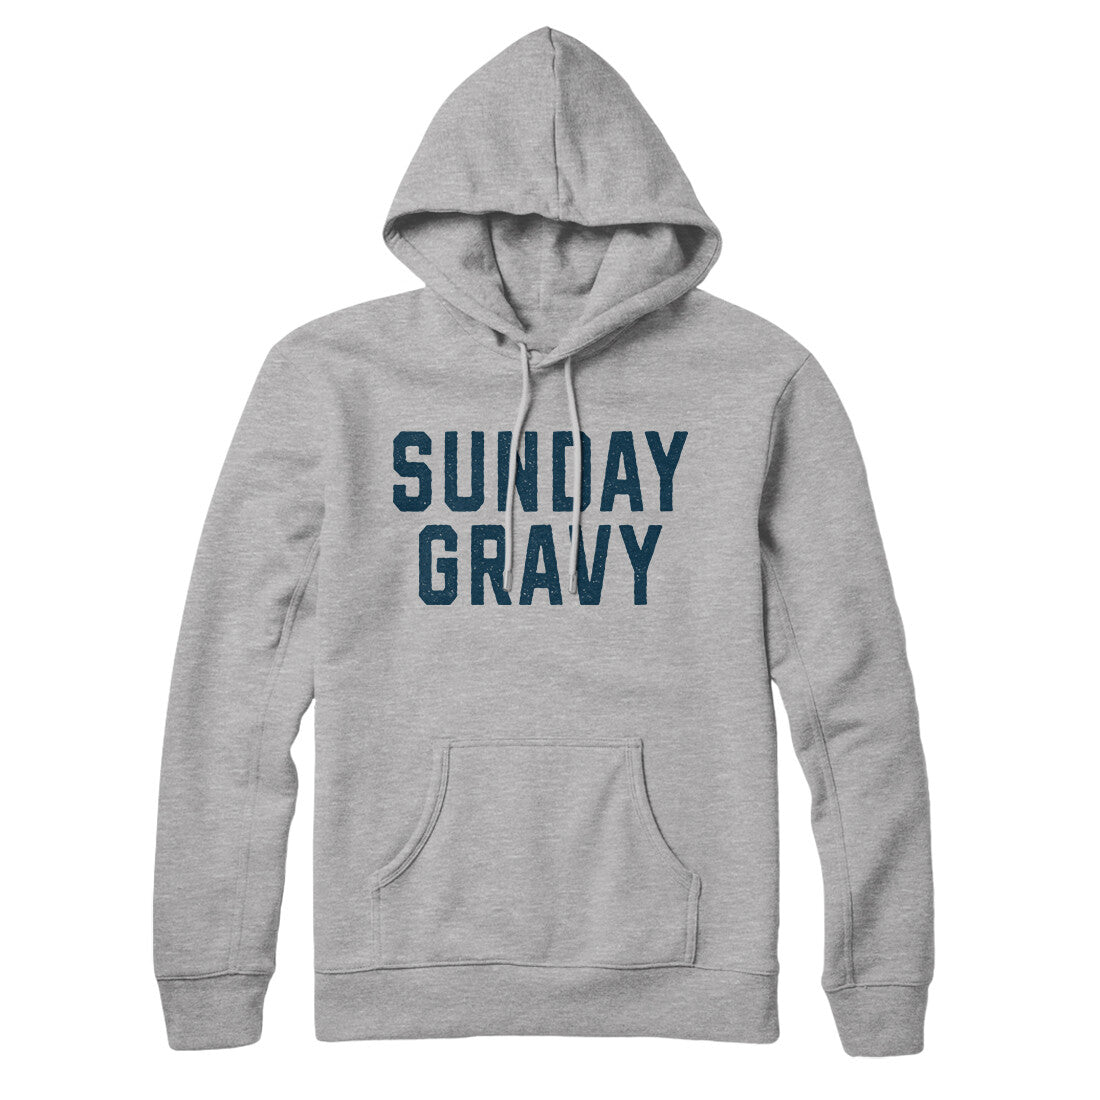 Sunday Gravy in Heather Grey Color